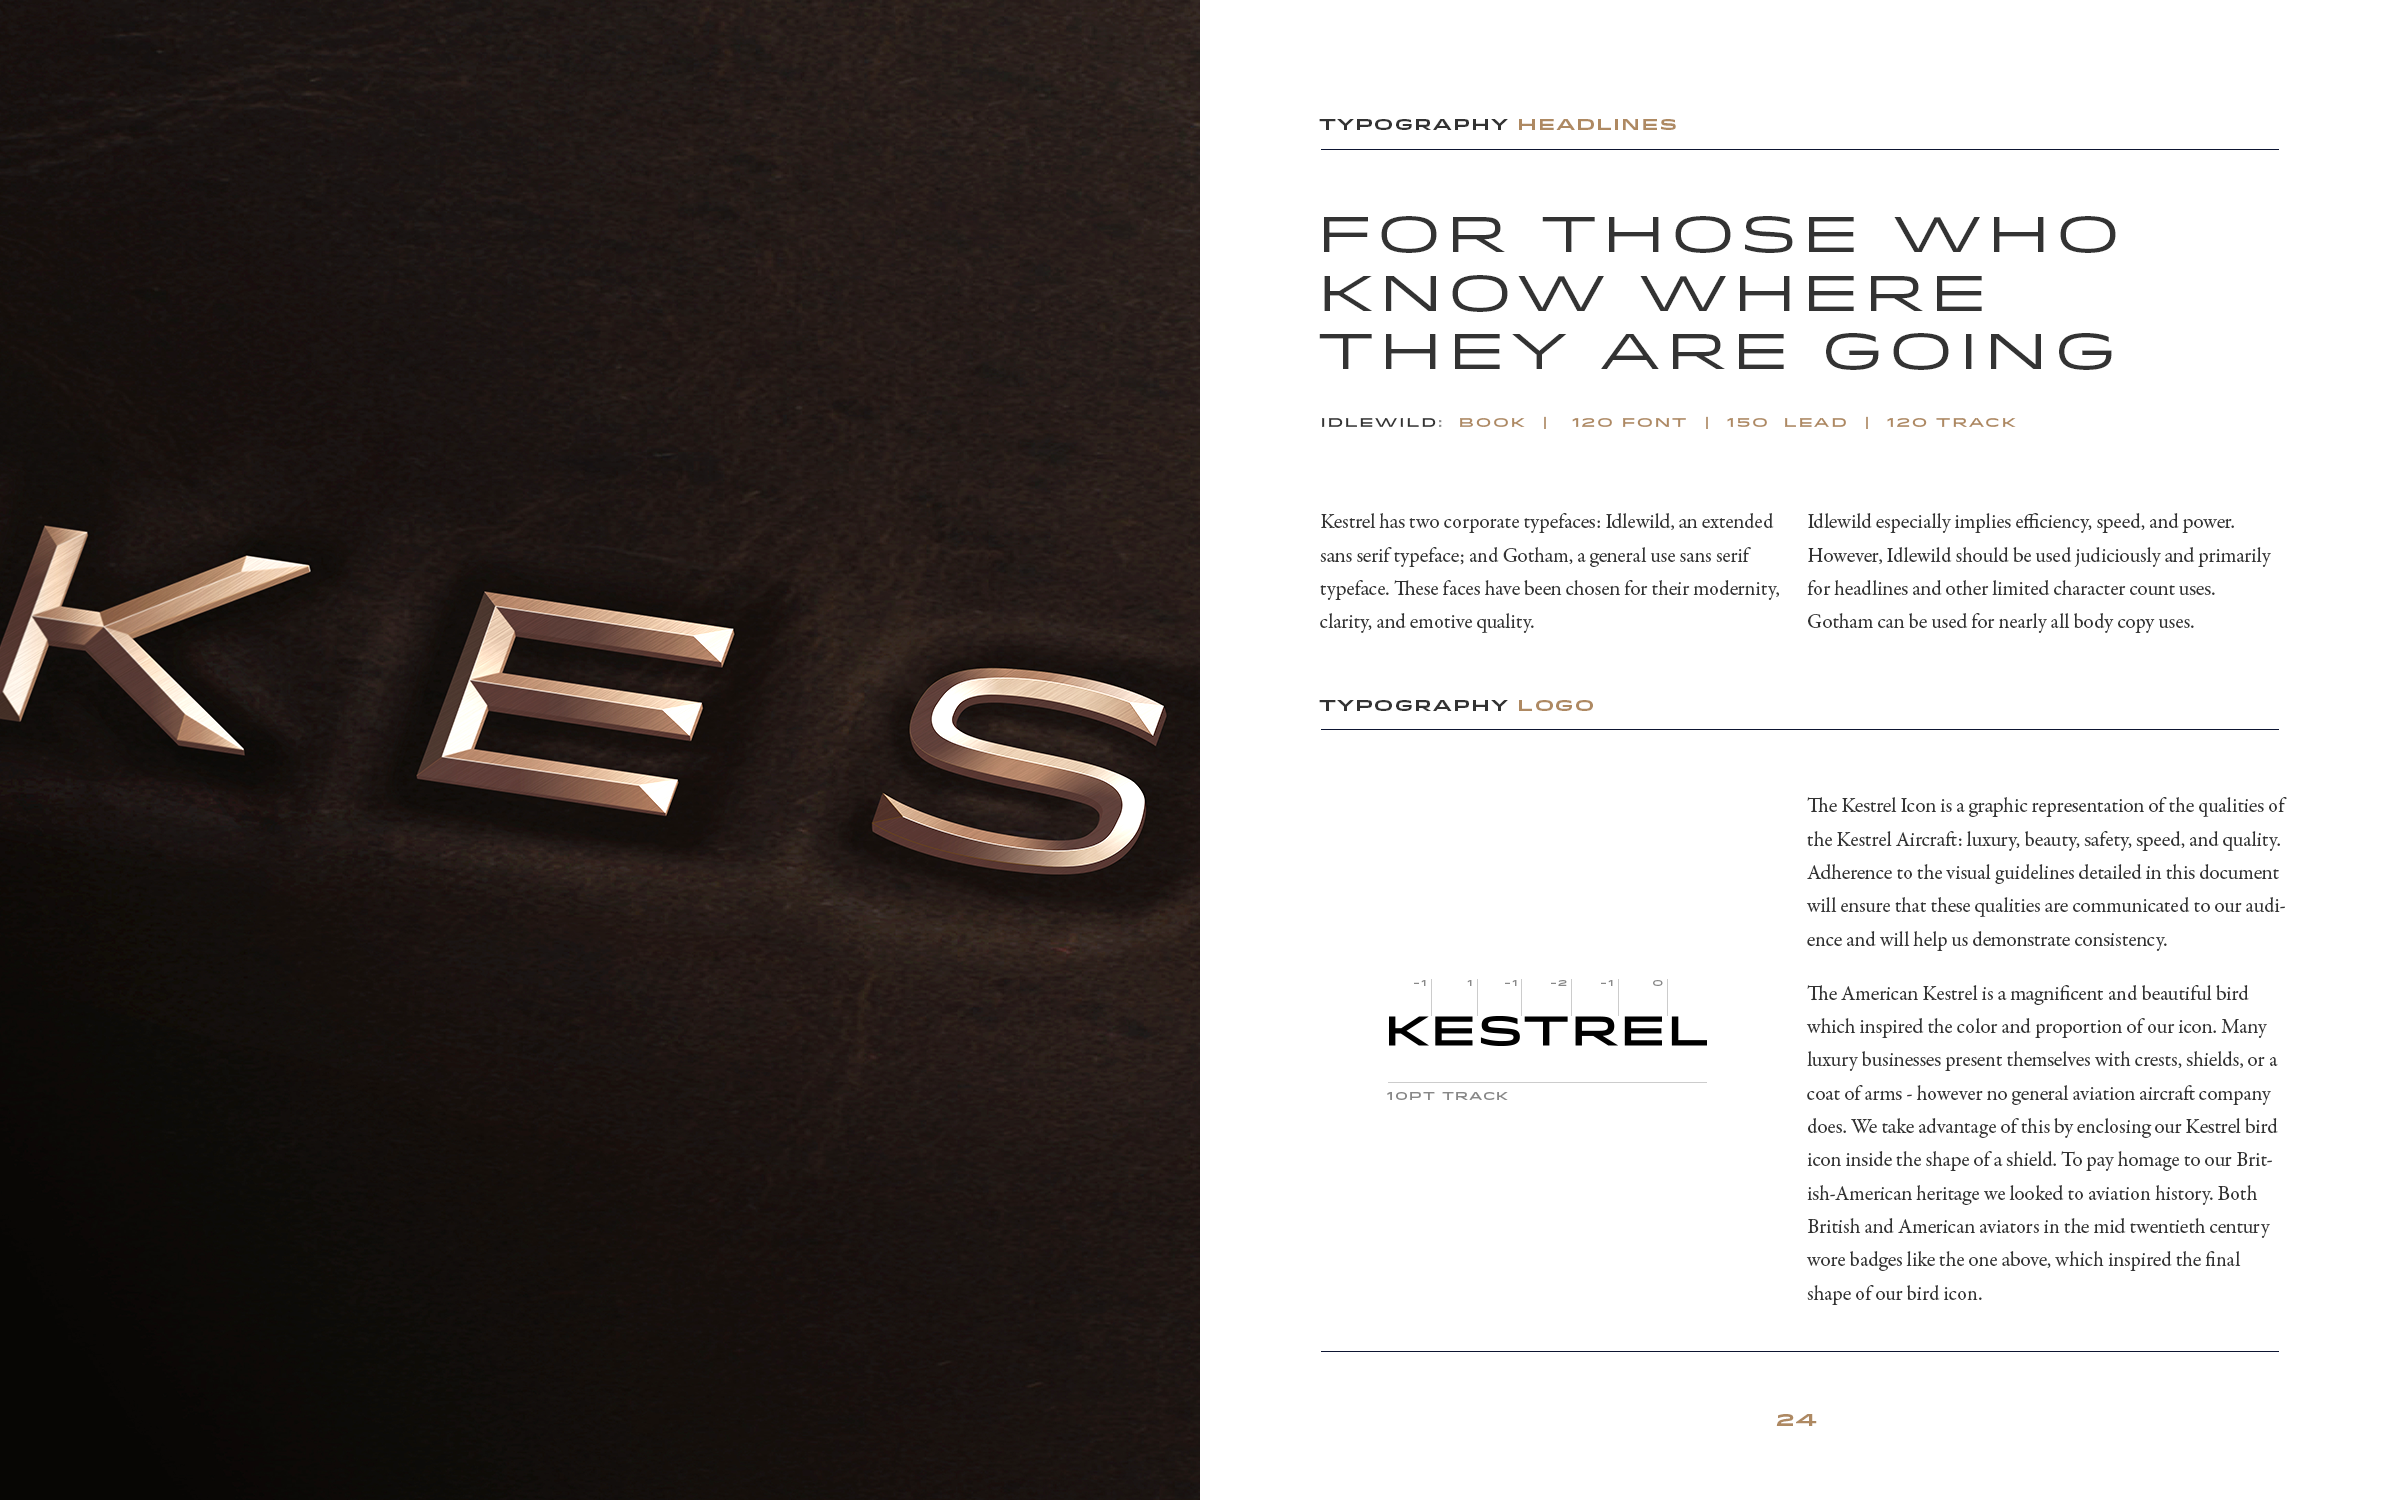 Kestrel Aircraft brand guidelines